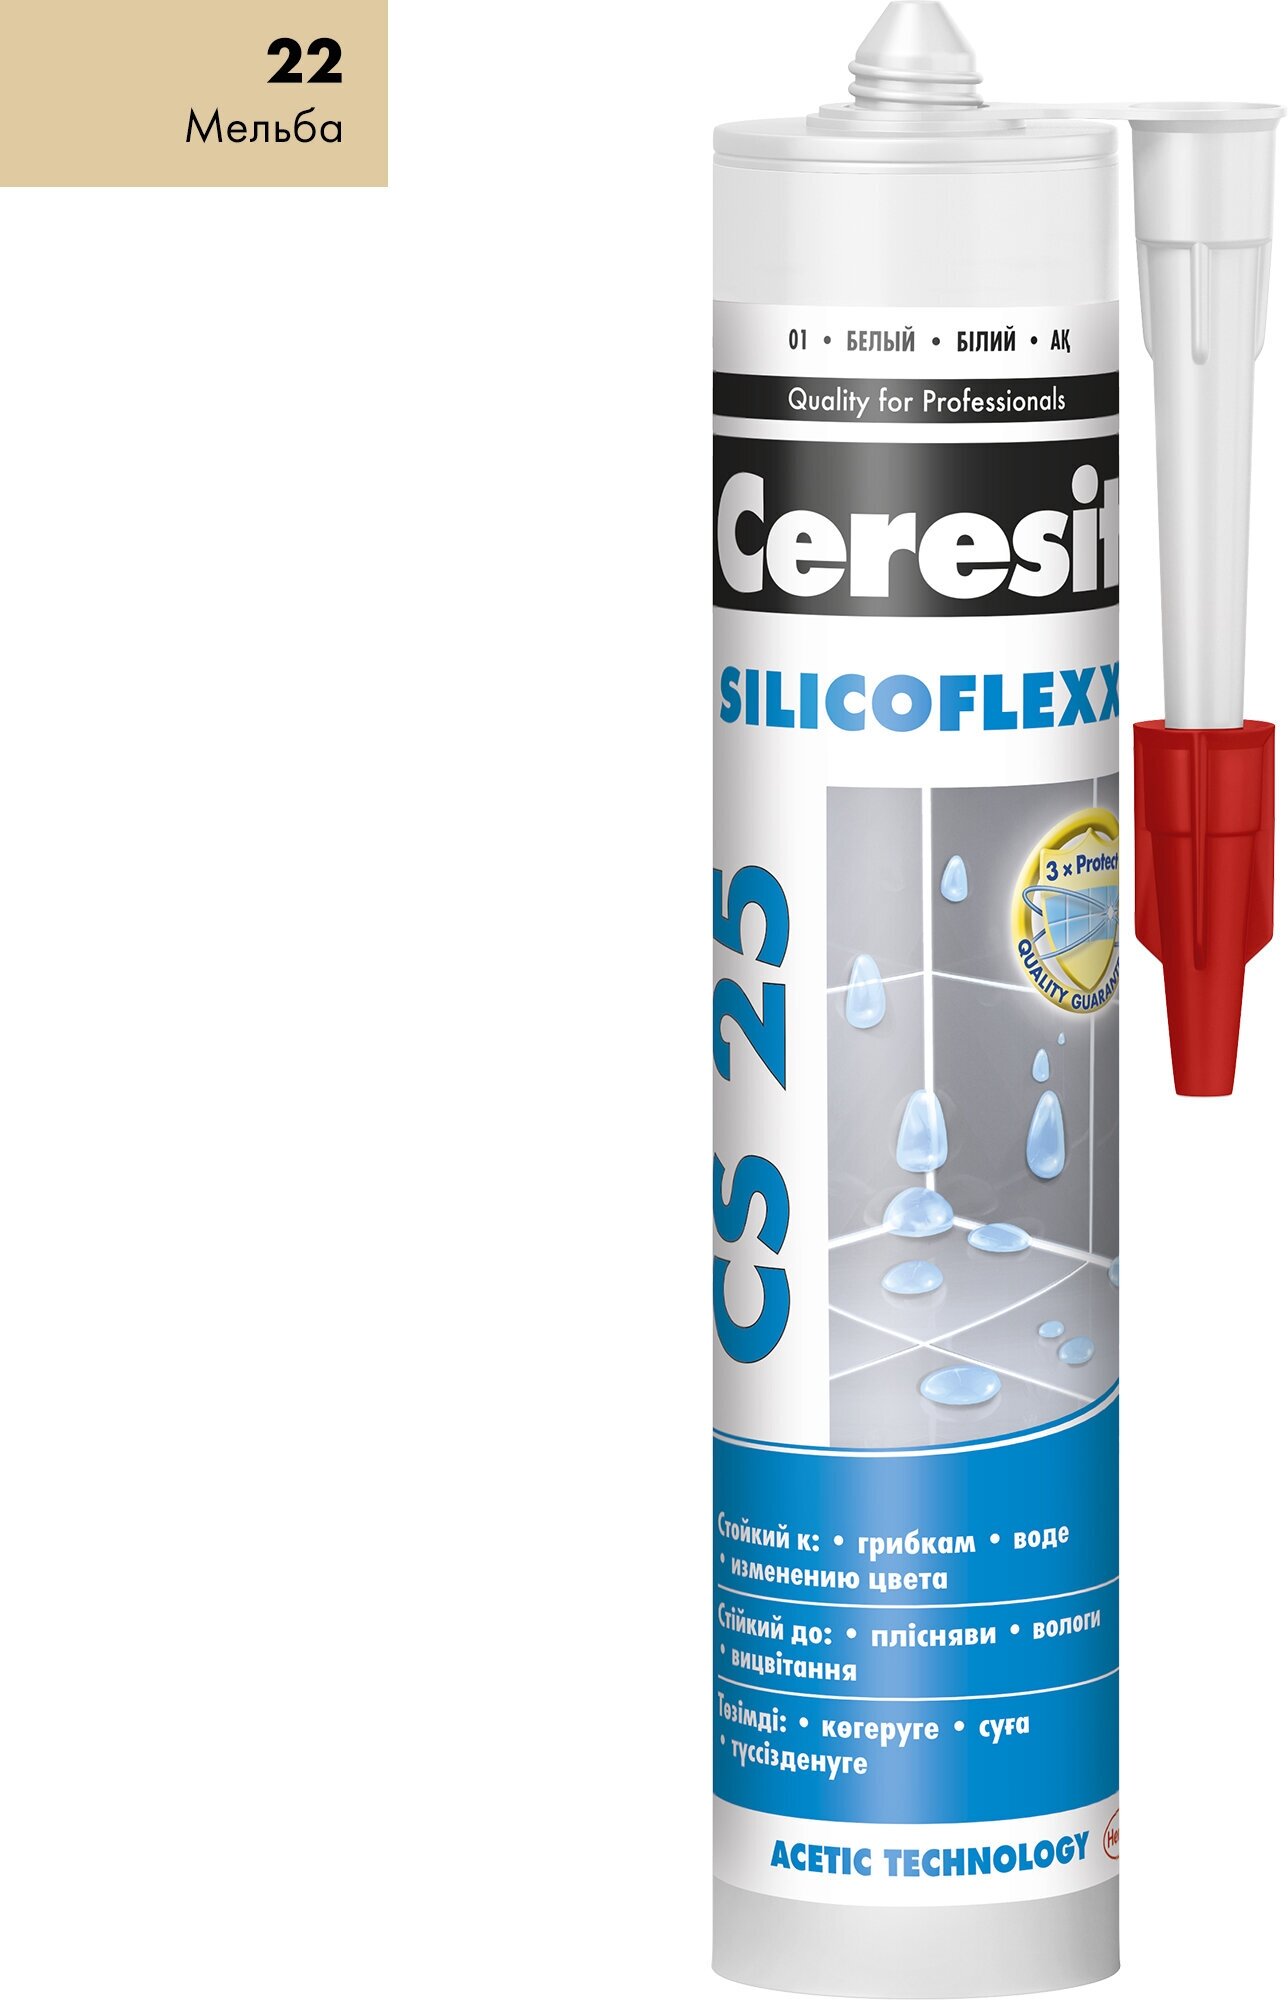 Затирка Ceresit CS 25 Silicoflexx, 0.28 кг, 0.28 л, мельба 22 - фотография № 4